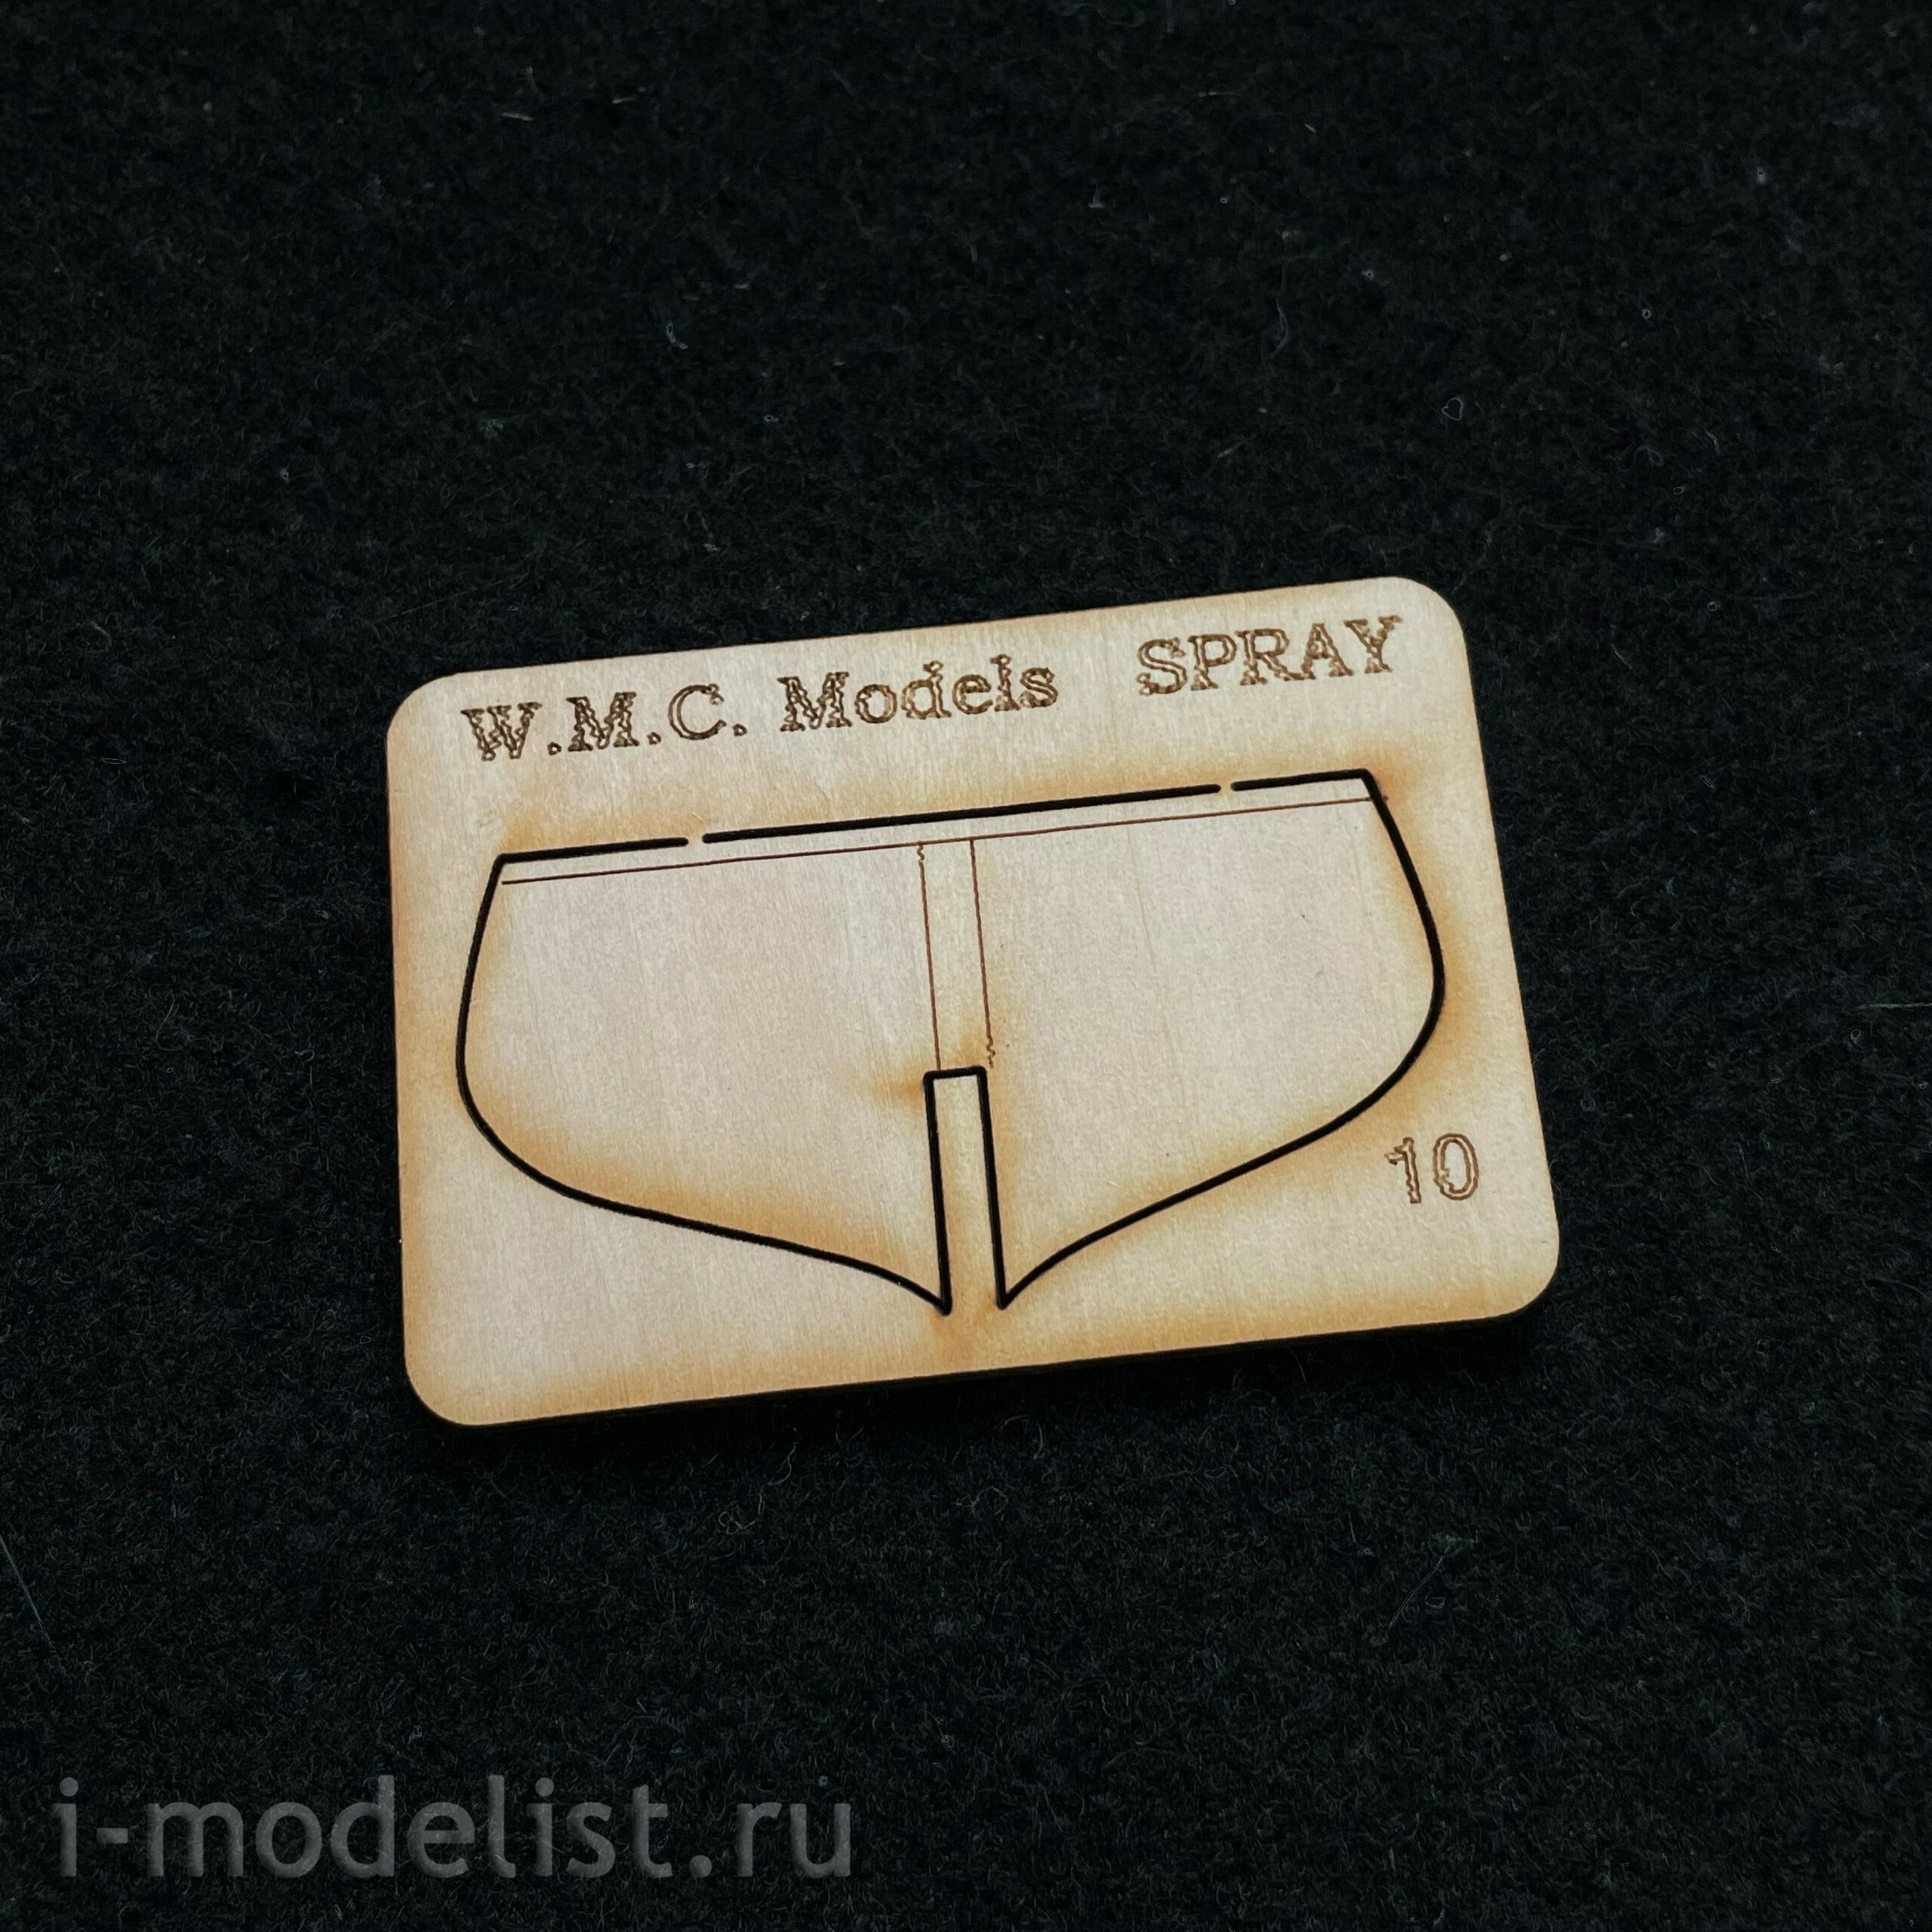 WMC-WK002 W.M.C. Models 1/50 Парусник Spray